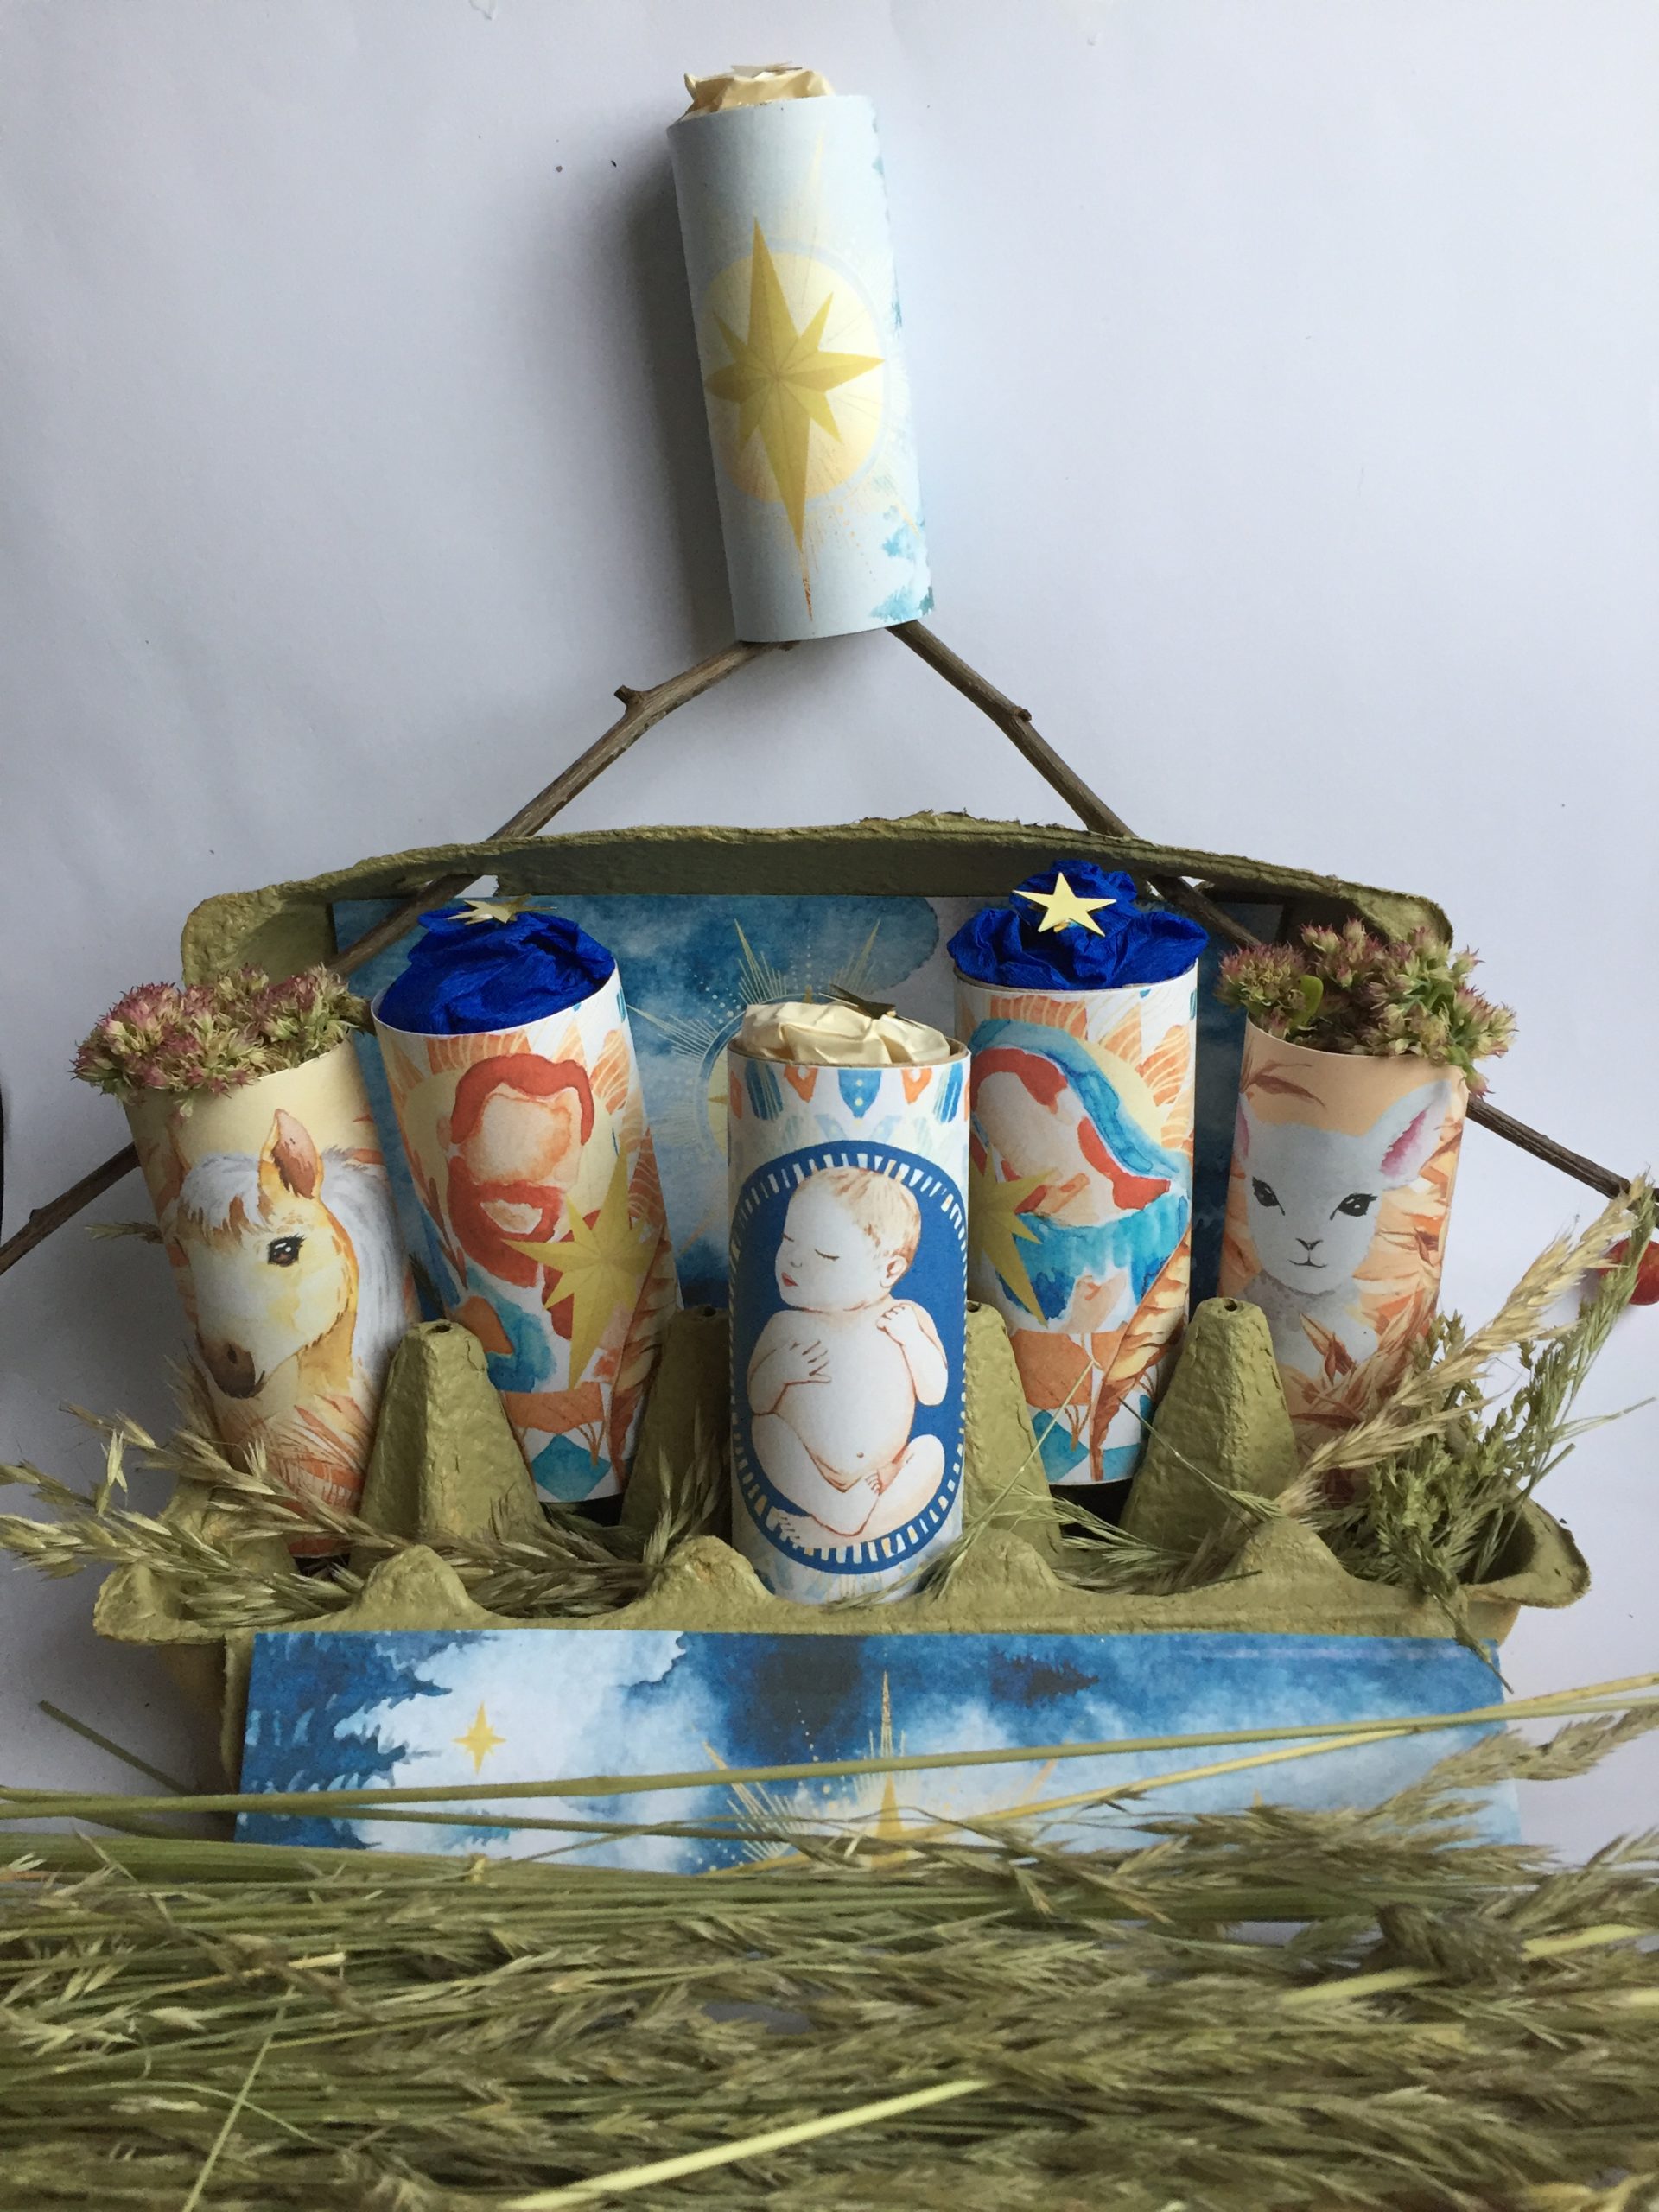 Egg box + toilet roll nativity craft kit – a fun family Christmas craft